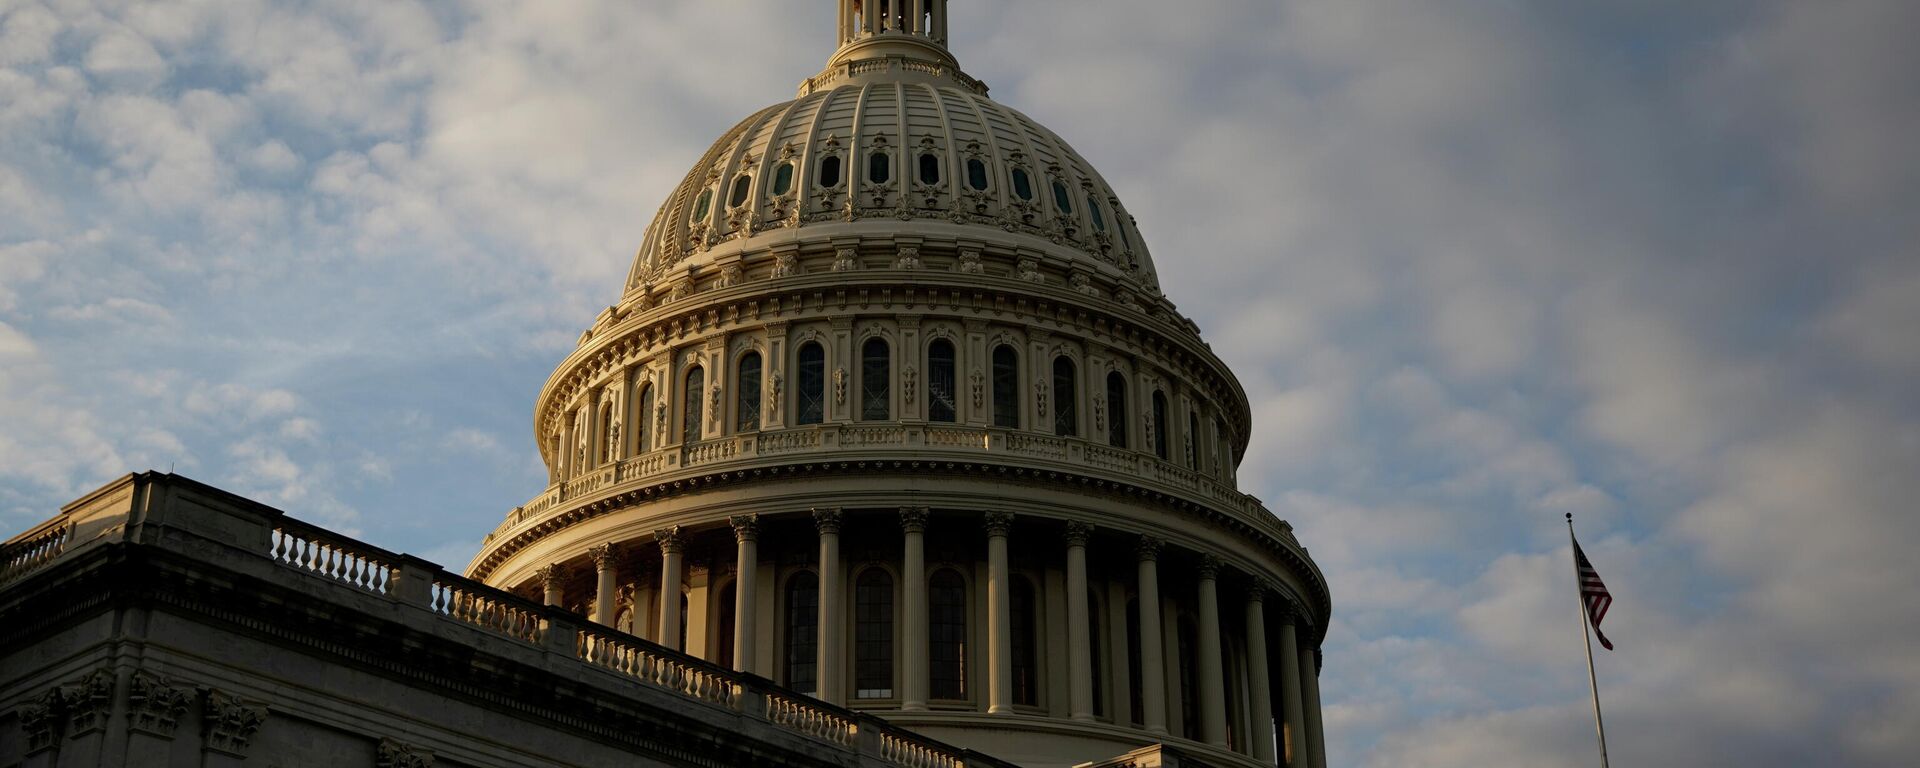 The U.S. Capitol building is seen in Washington, U.S., November 16, 2021 - Sputnik International, 1920, 02.12.2021